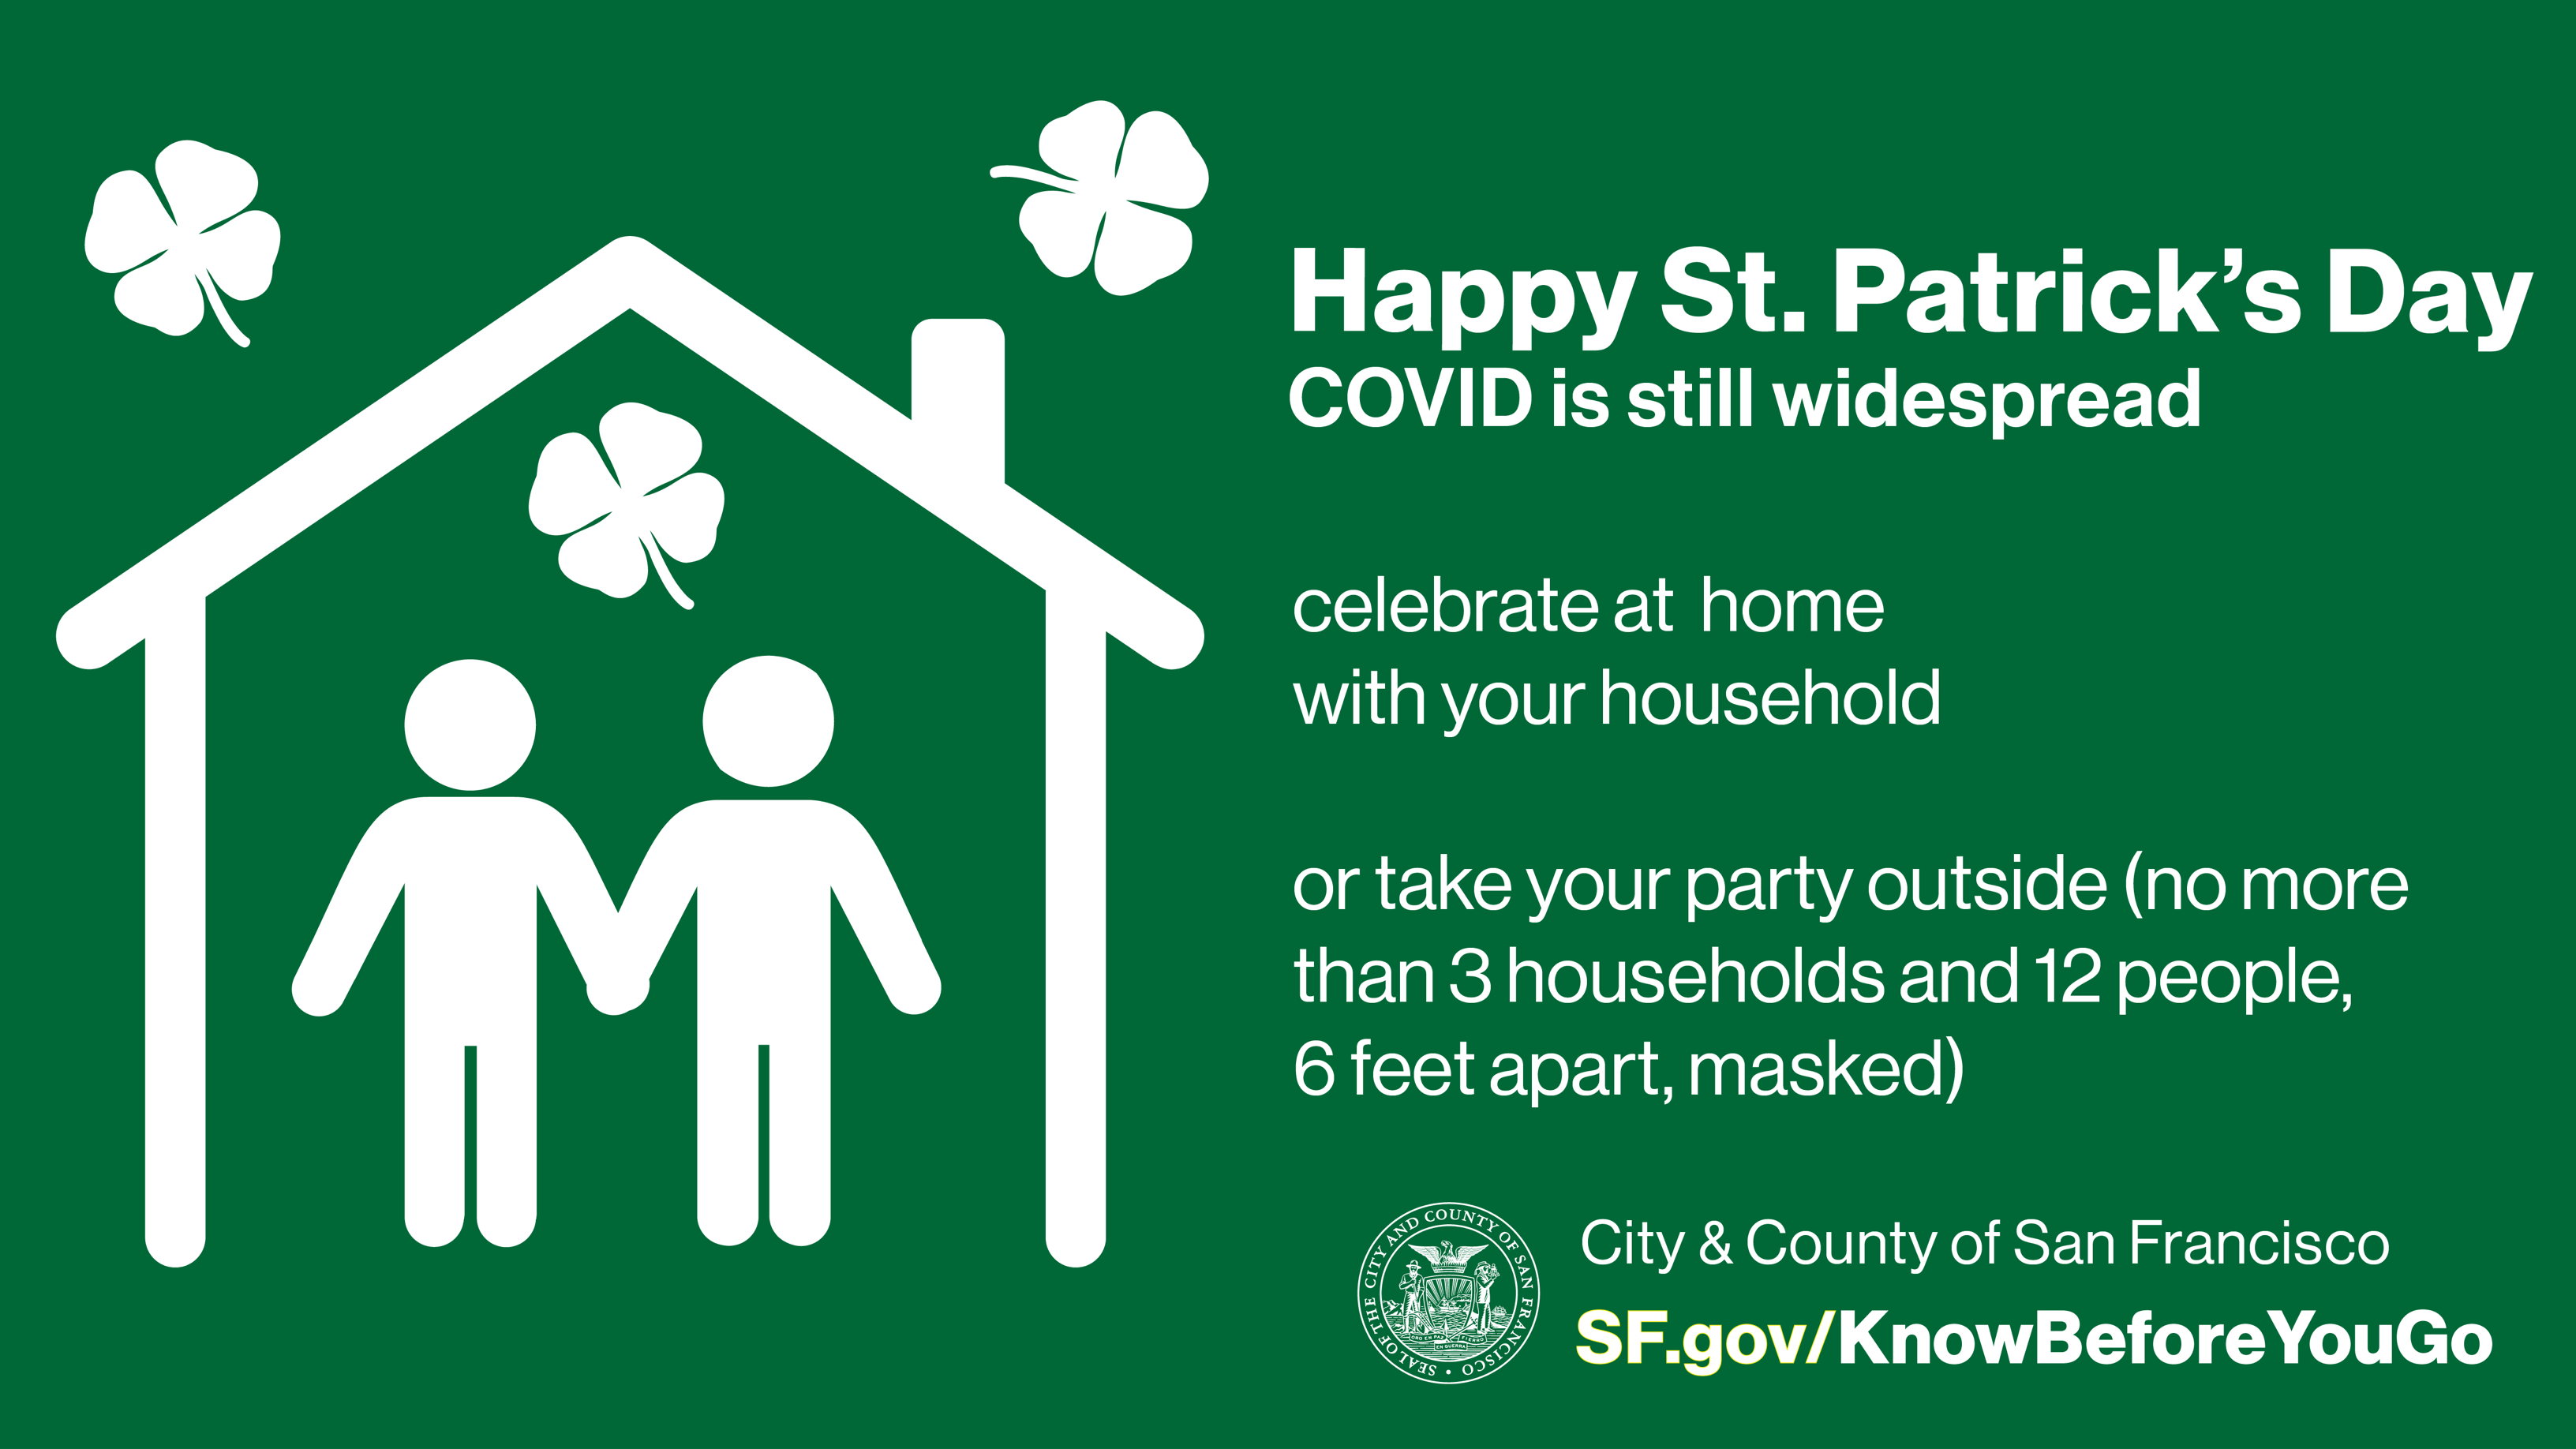 Image to promote a safe St. Patrick's Day